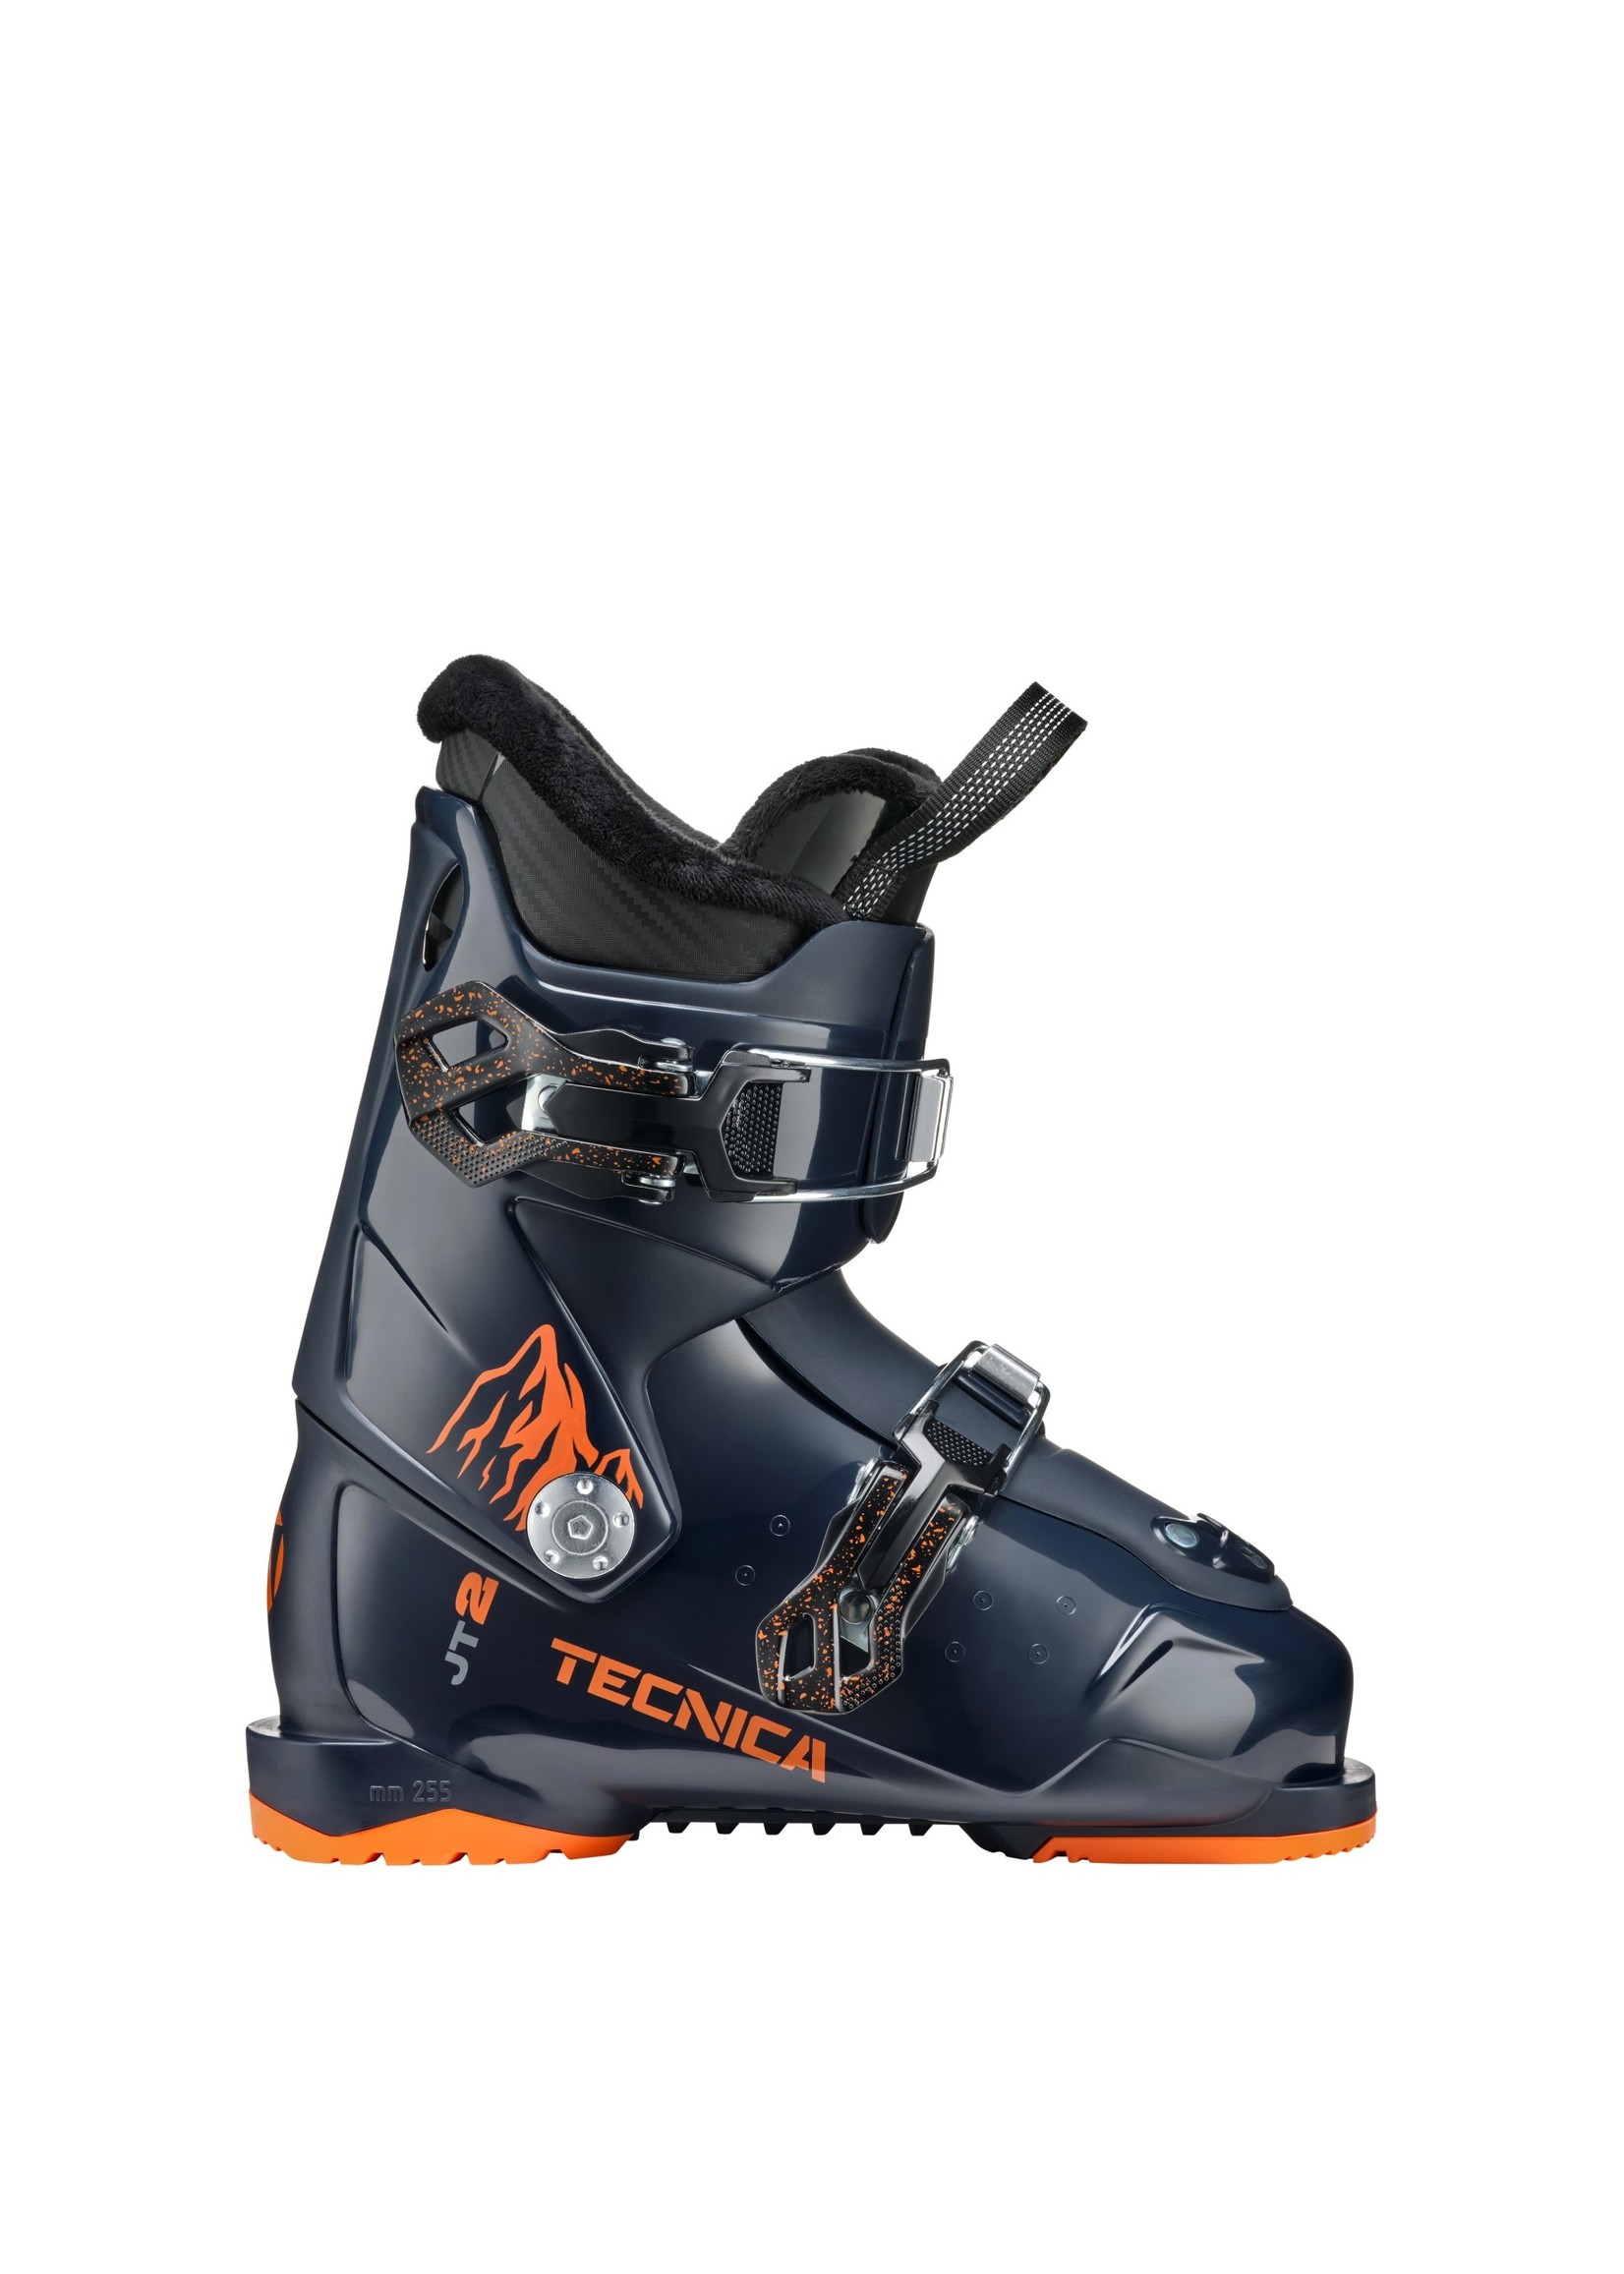 Tecnica Tot Ski Boot JT 2